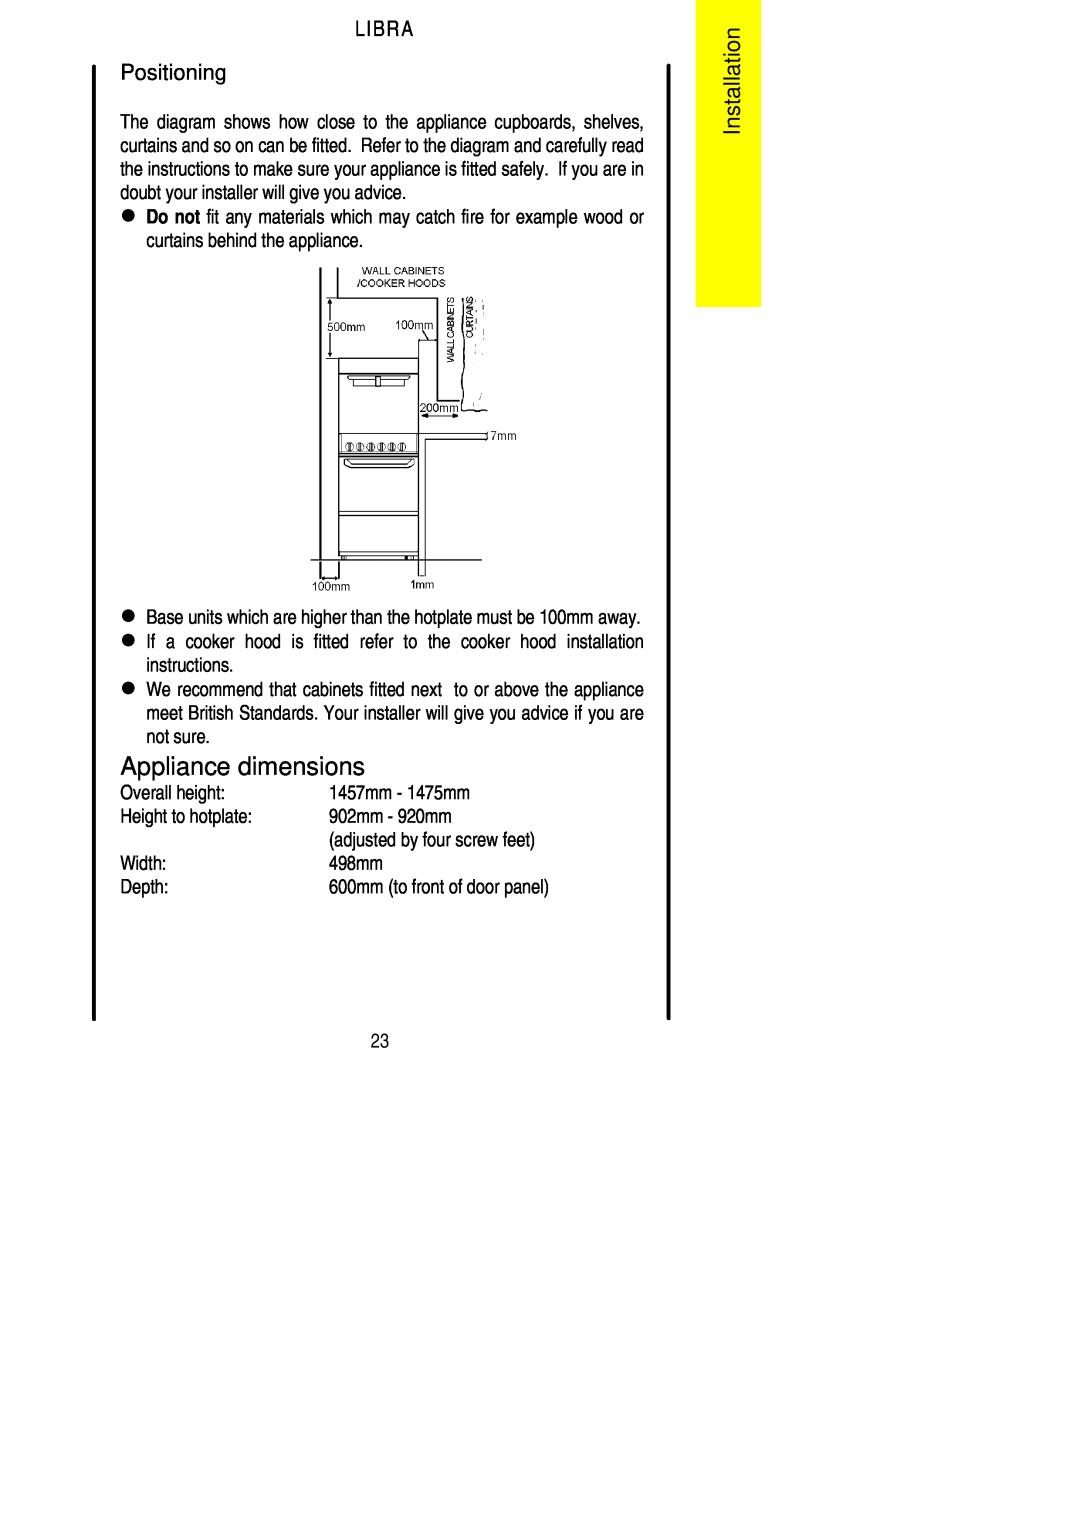 Parkinson Cowan Libra installation instructions Appliance dimensions, Installation, LIBRA Positioning 